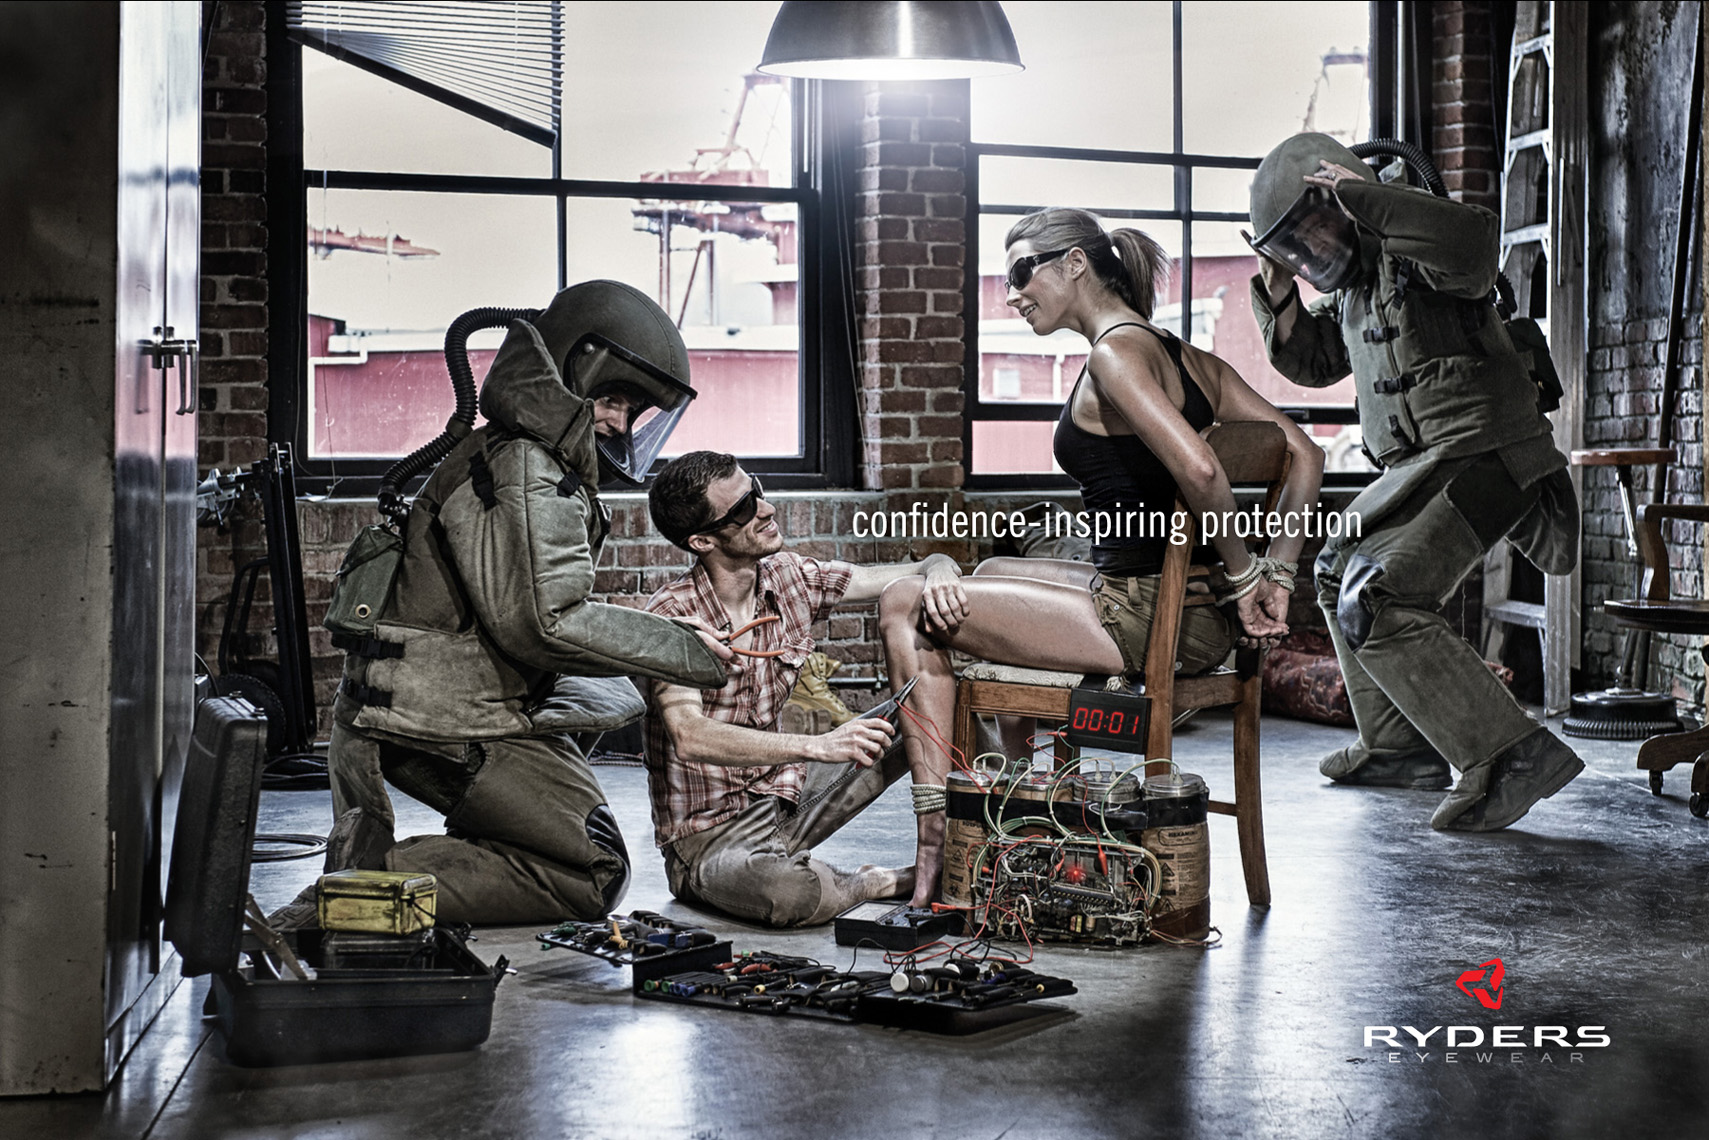 Bomb squad Ryders Eyewear advertising photography by Vancouver advertising photographer Waldy Martens